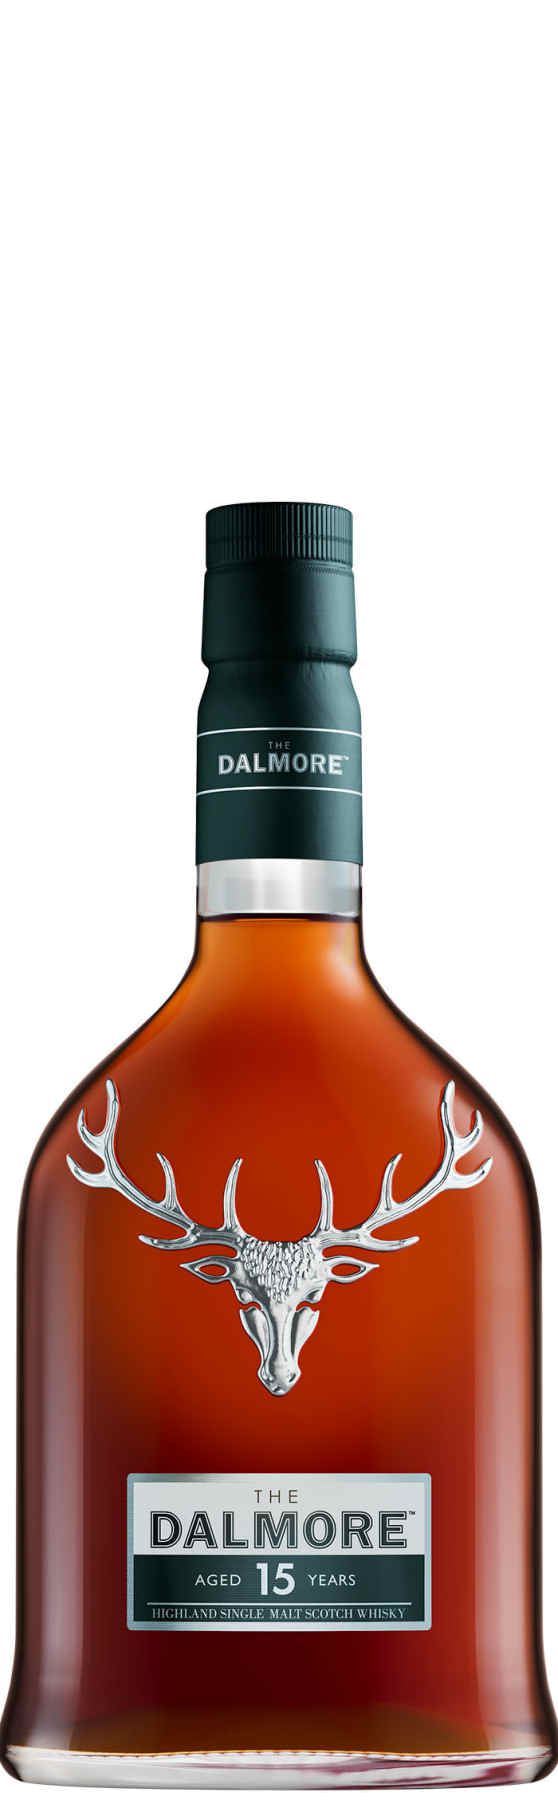 The Dalmore Highland Single Malt 15 Years